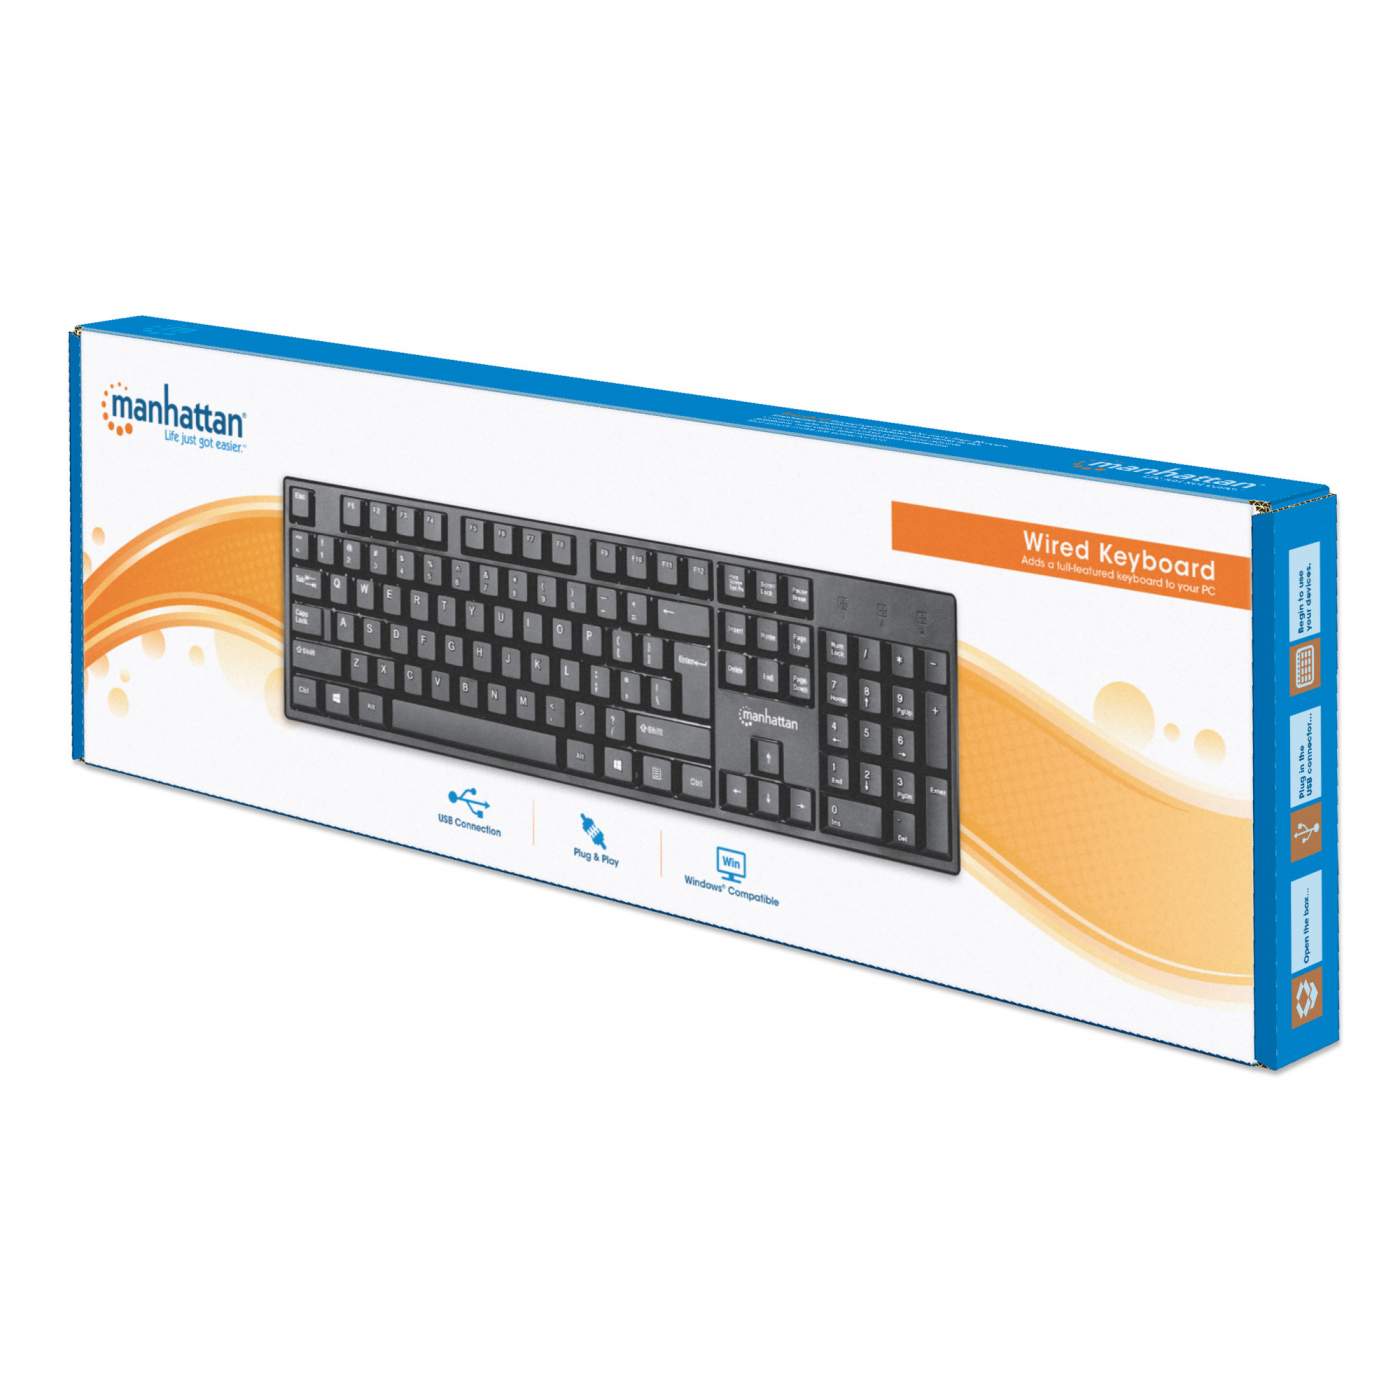 Wired Keyboard Packaging Image 2